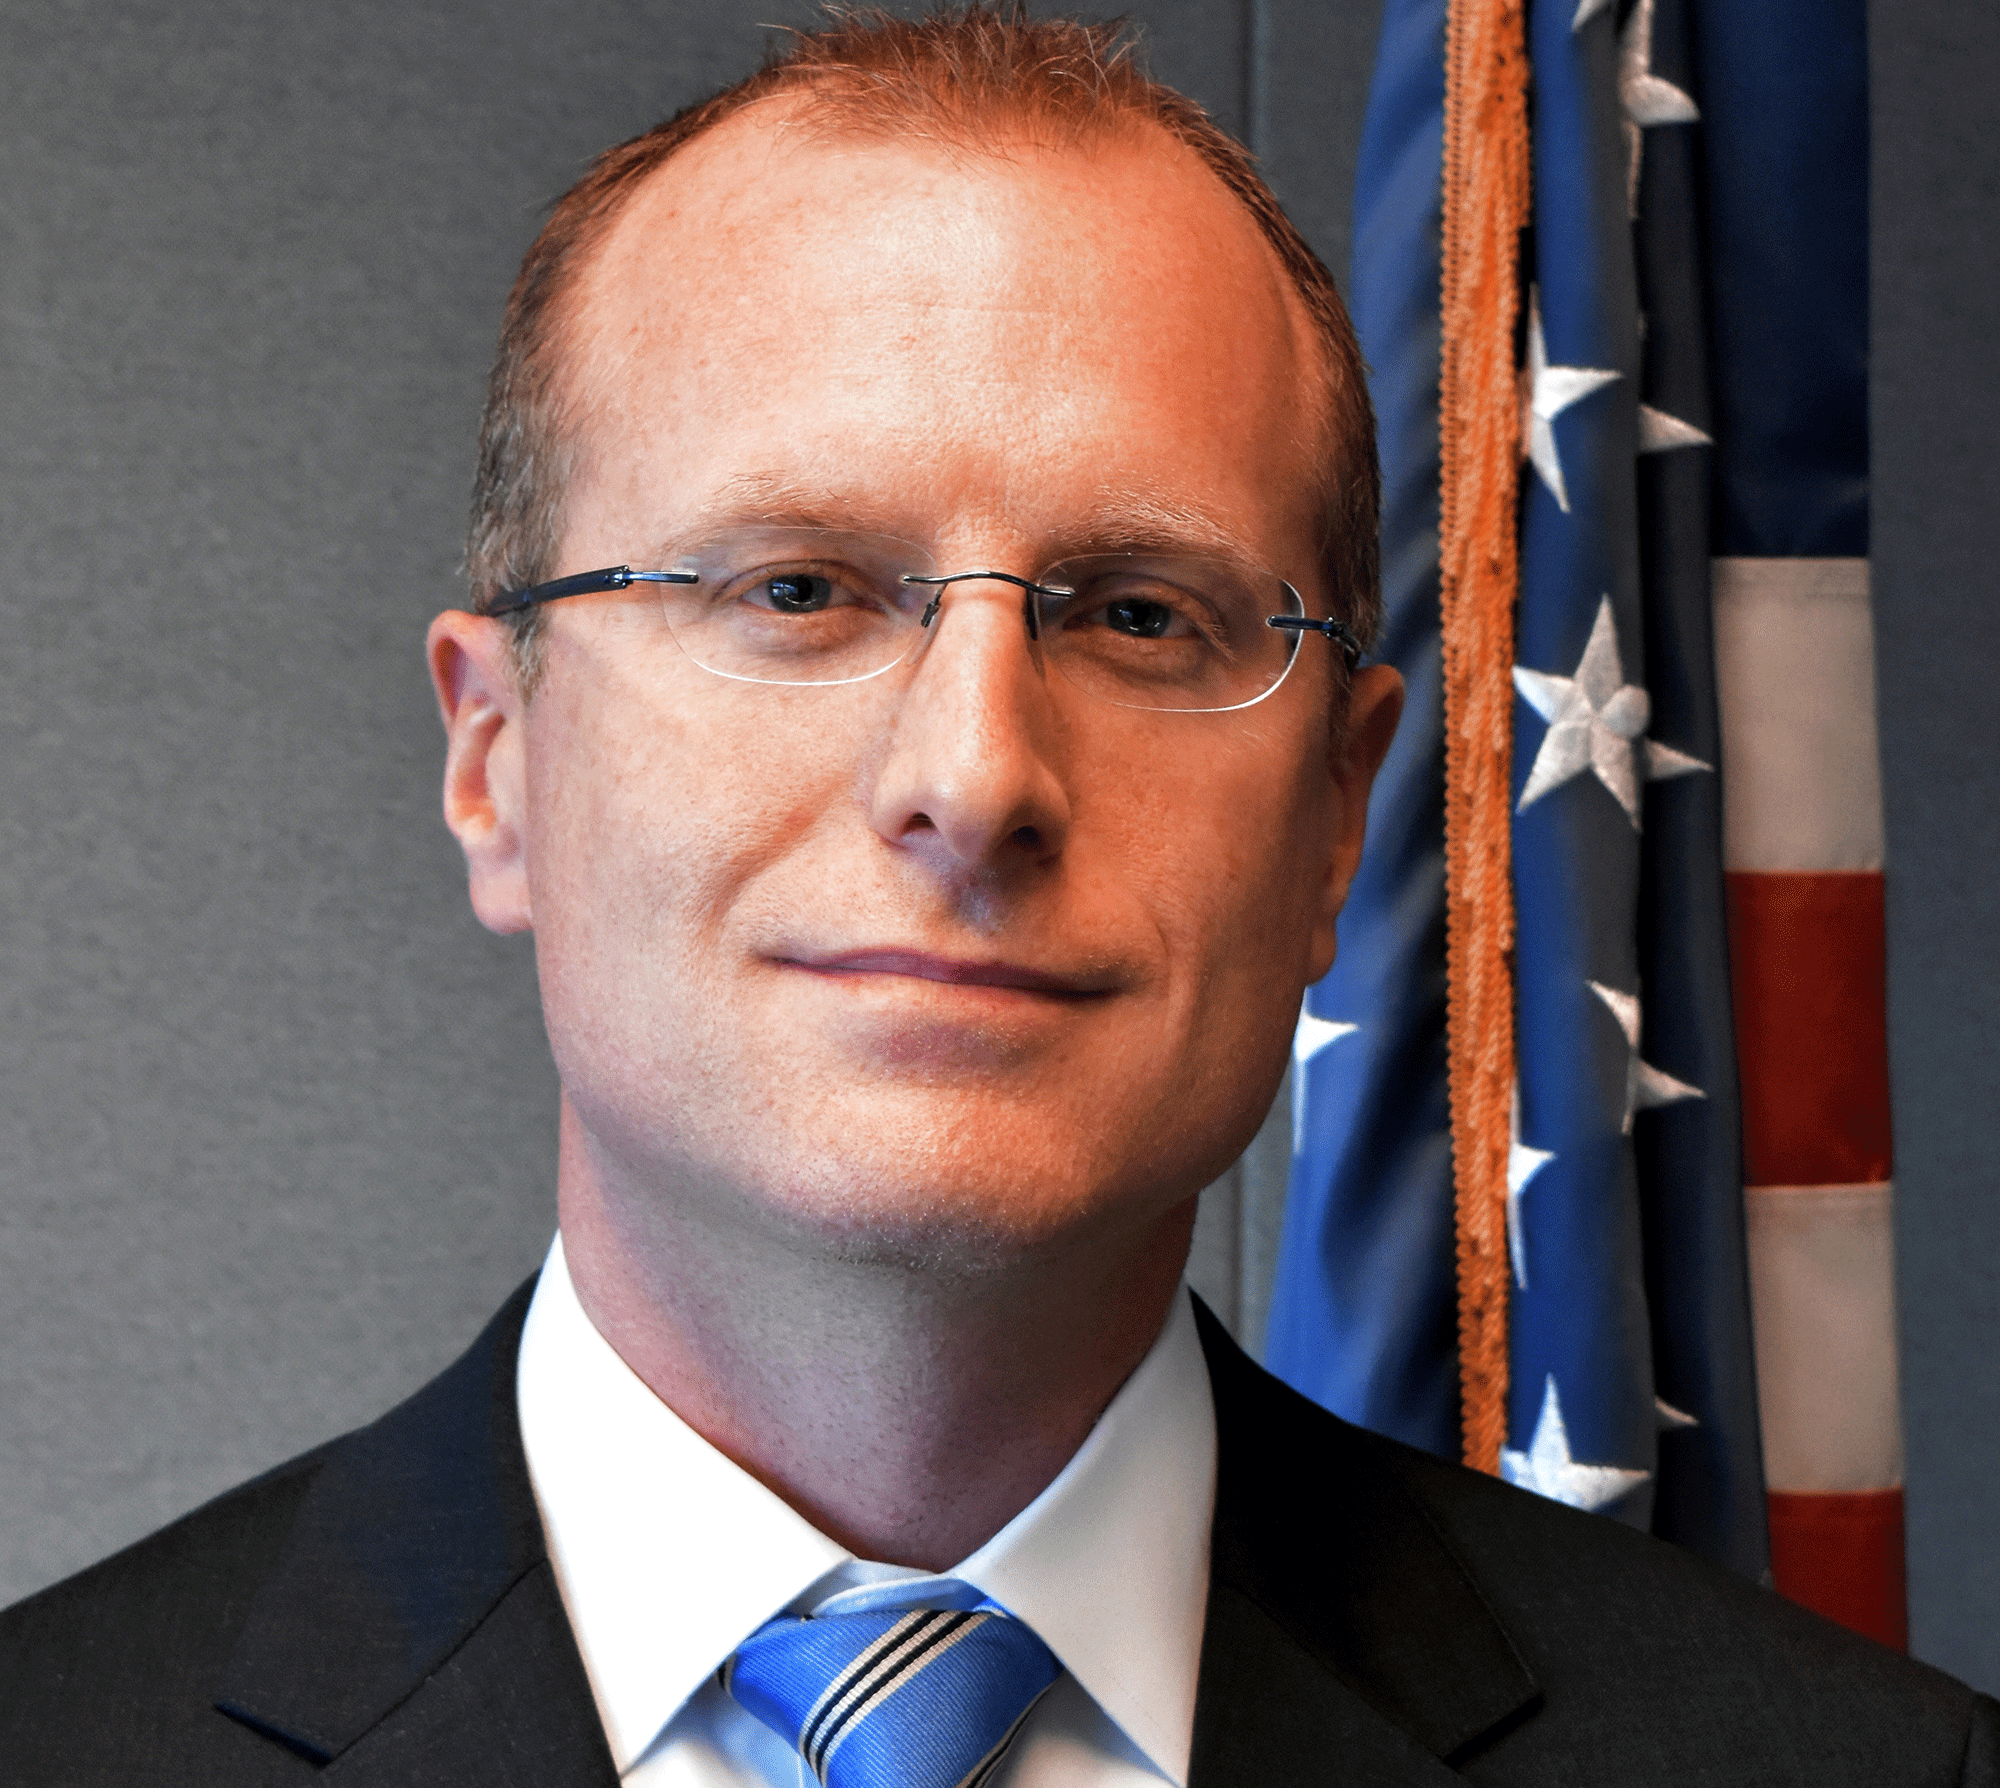 FCC Commissioner Brednan Carr